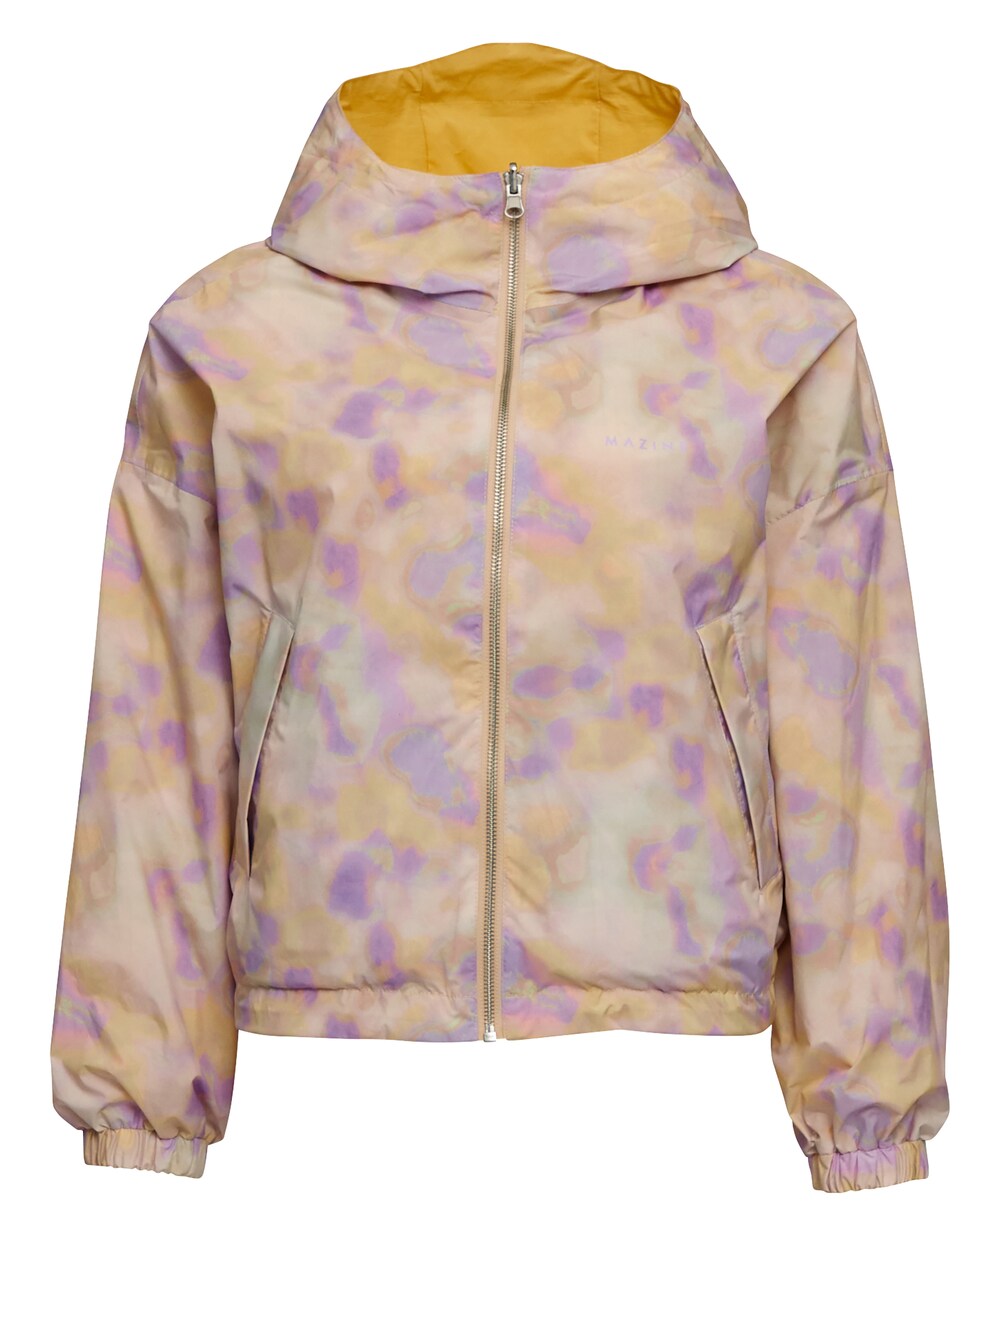 Спортивная куртка Cherry Hill, карри/светло-фиолетовый Mazine